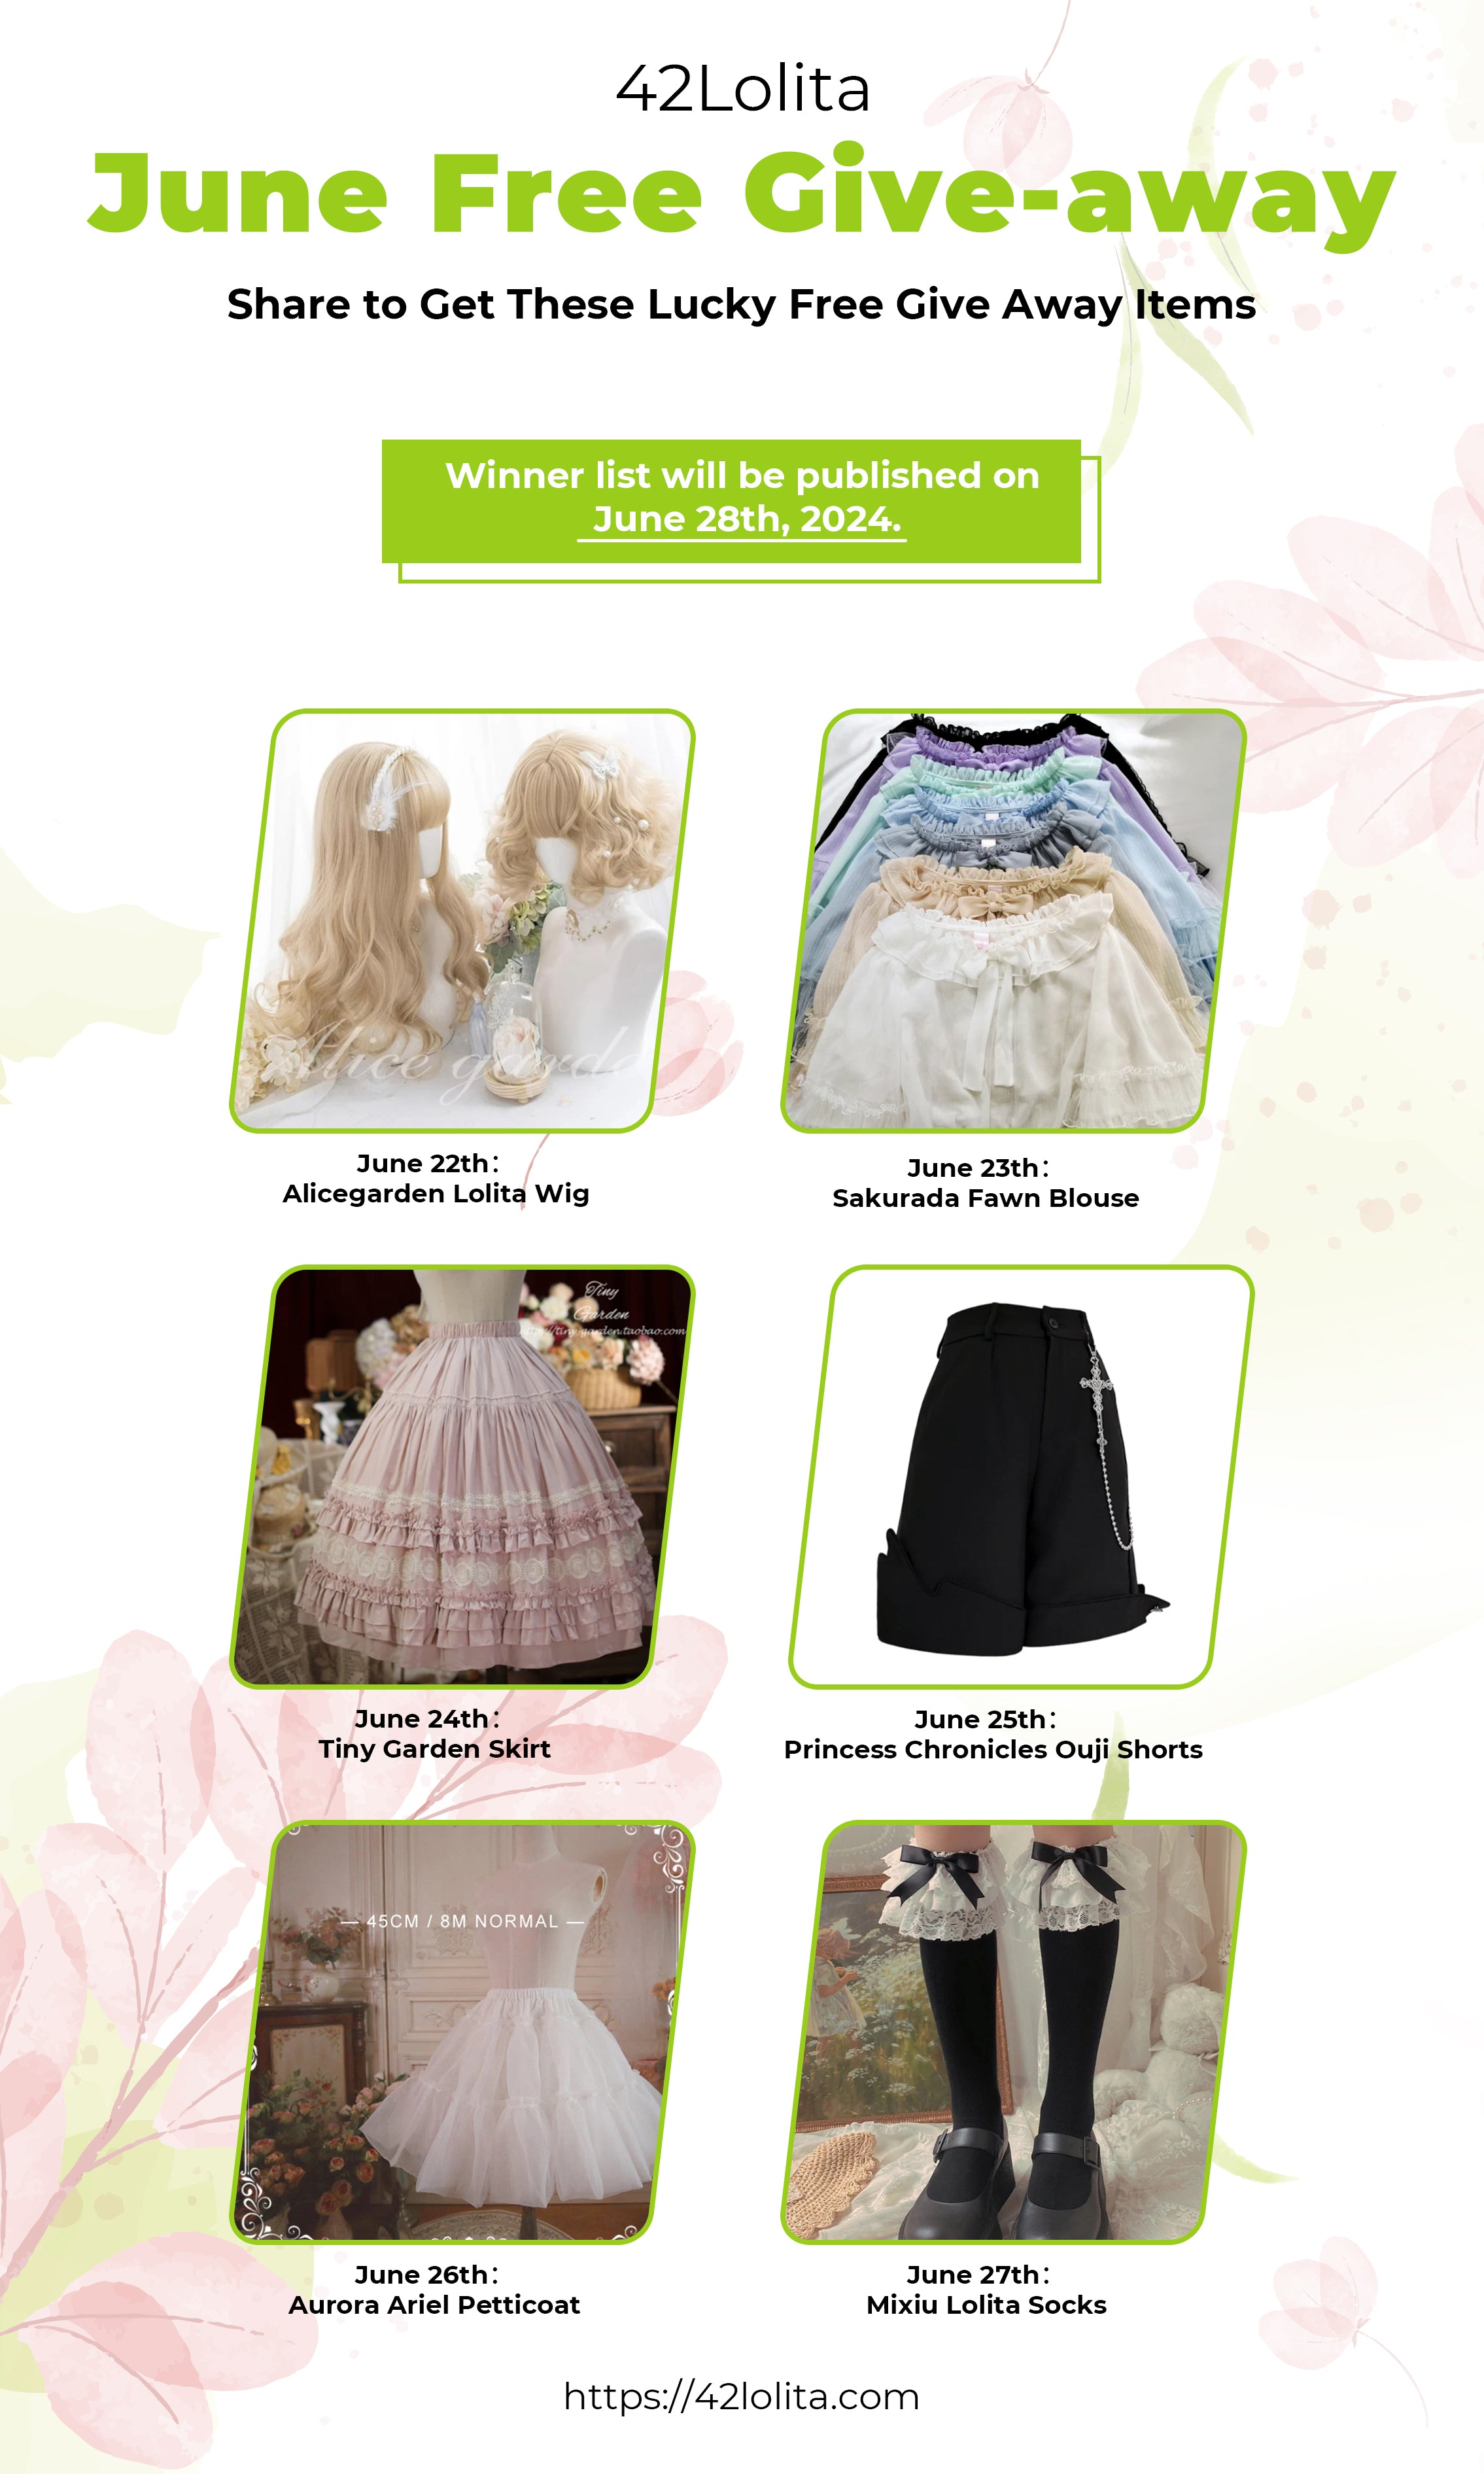 42Lolita - Online Lolita and Ouji Fashion Store